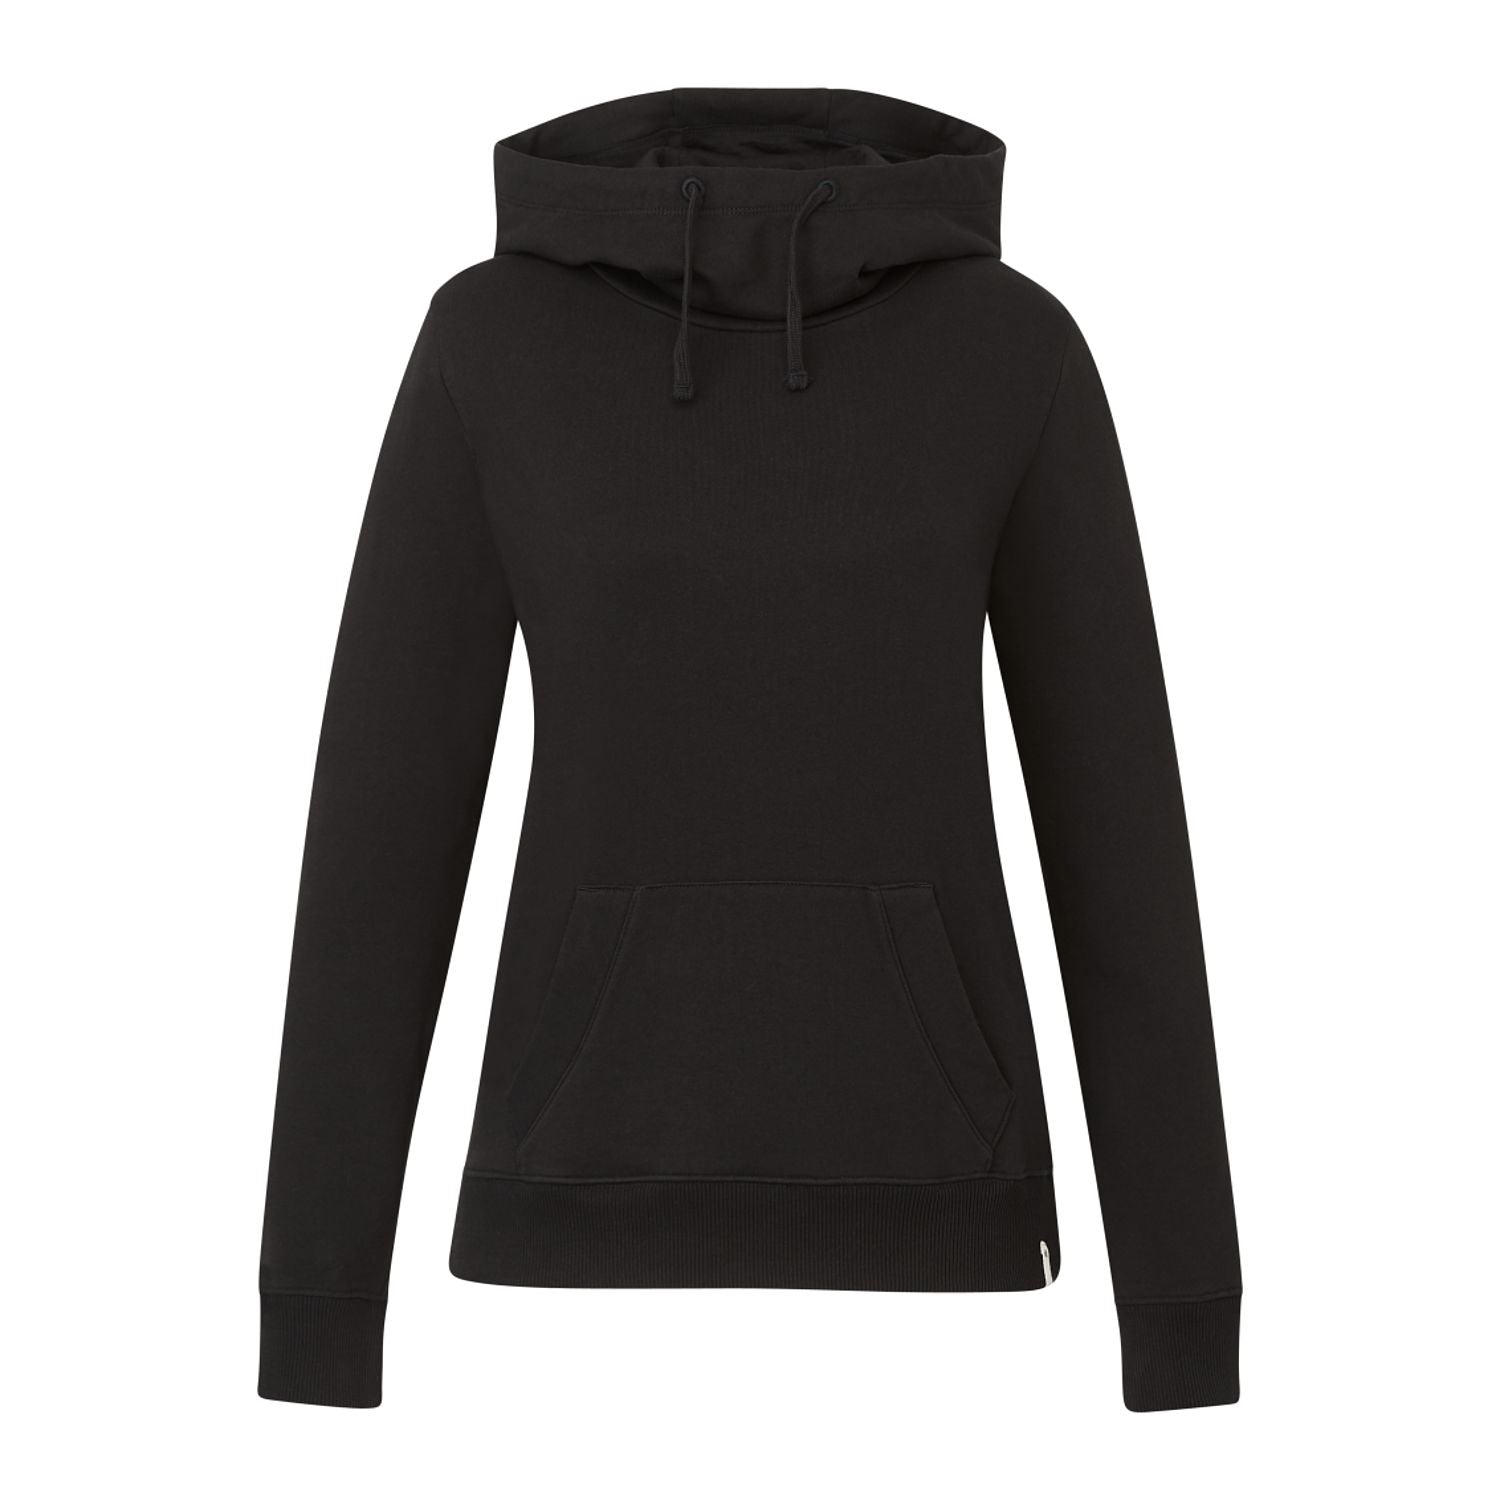 Customizable Tentree women's organic cotton banshee hoodie in black.